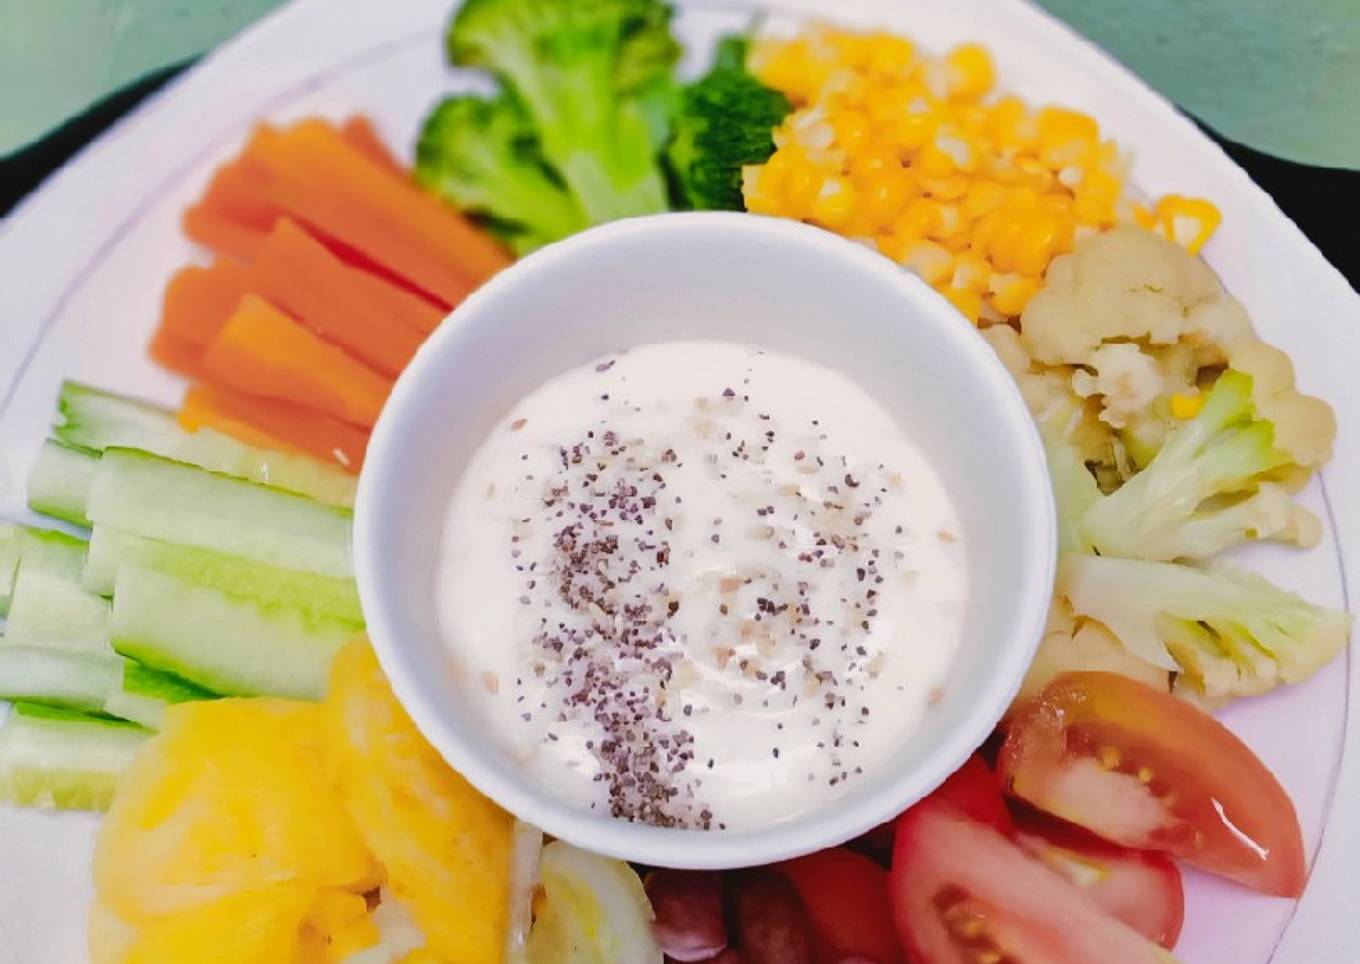 Mixed Vegies&Fruits Salad (salad sayur dan buah)